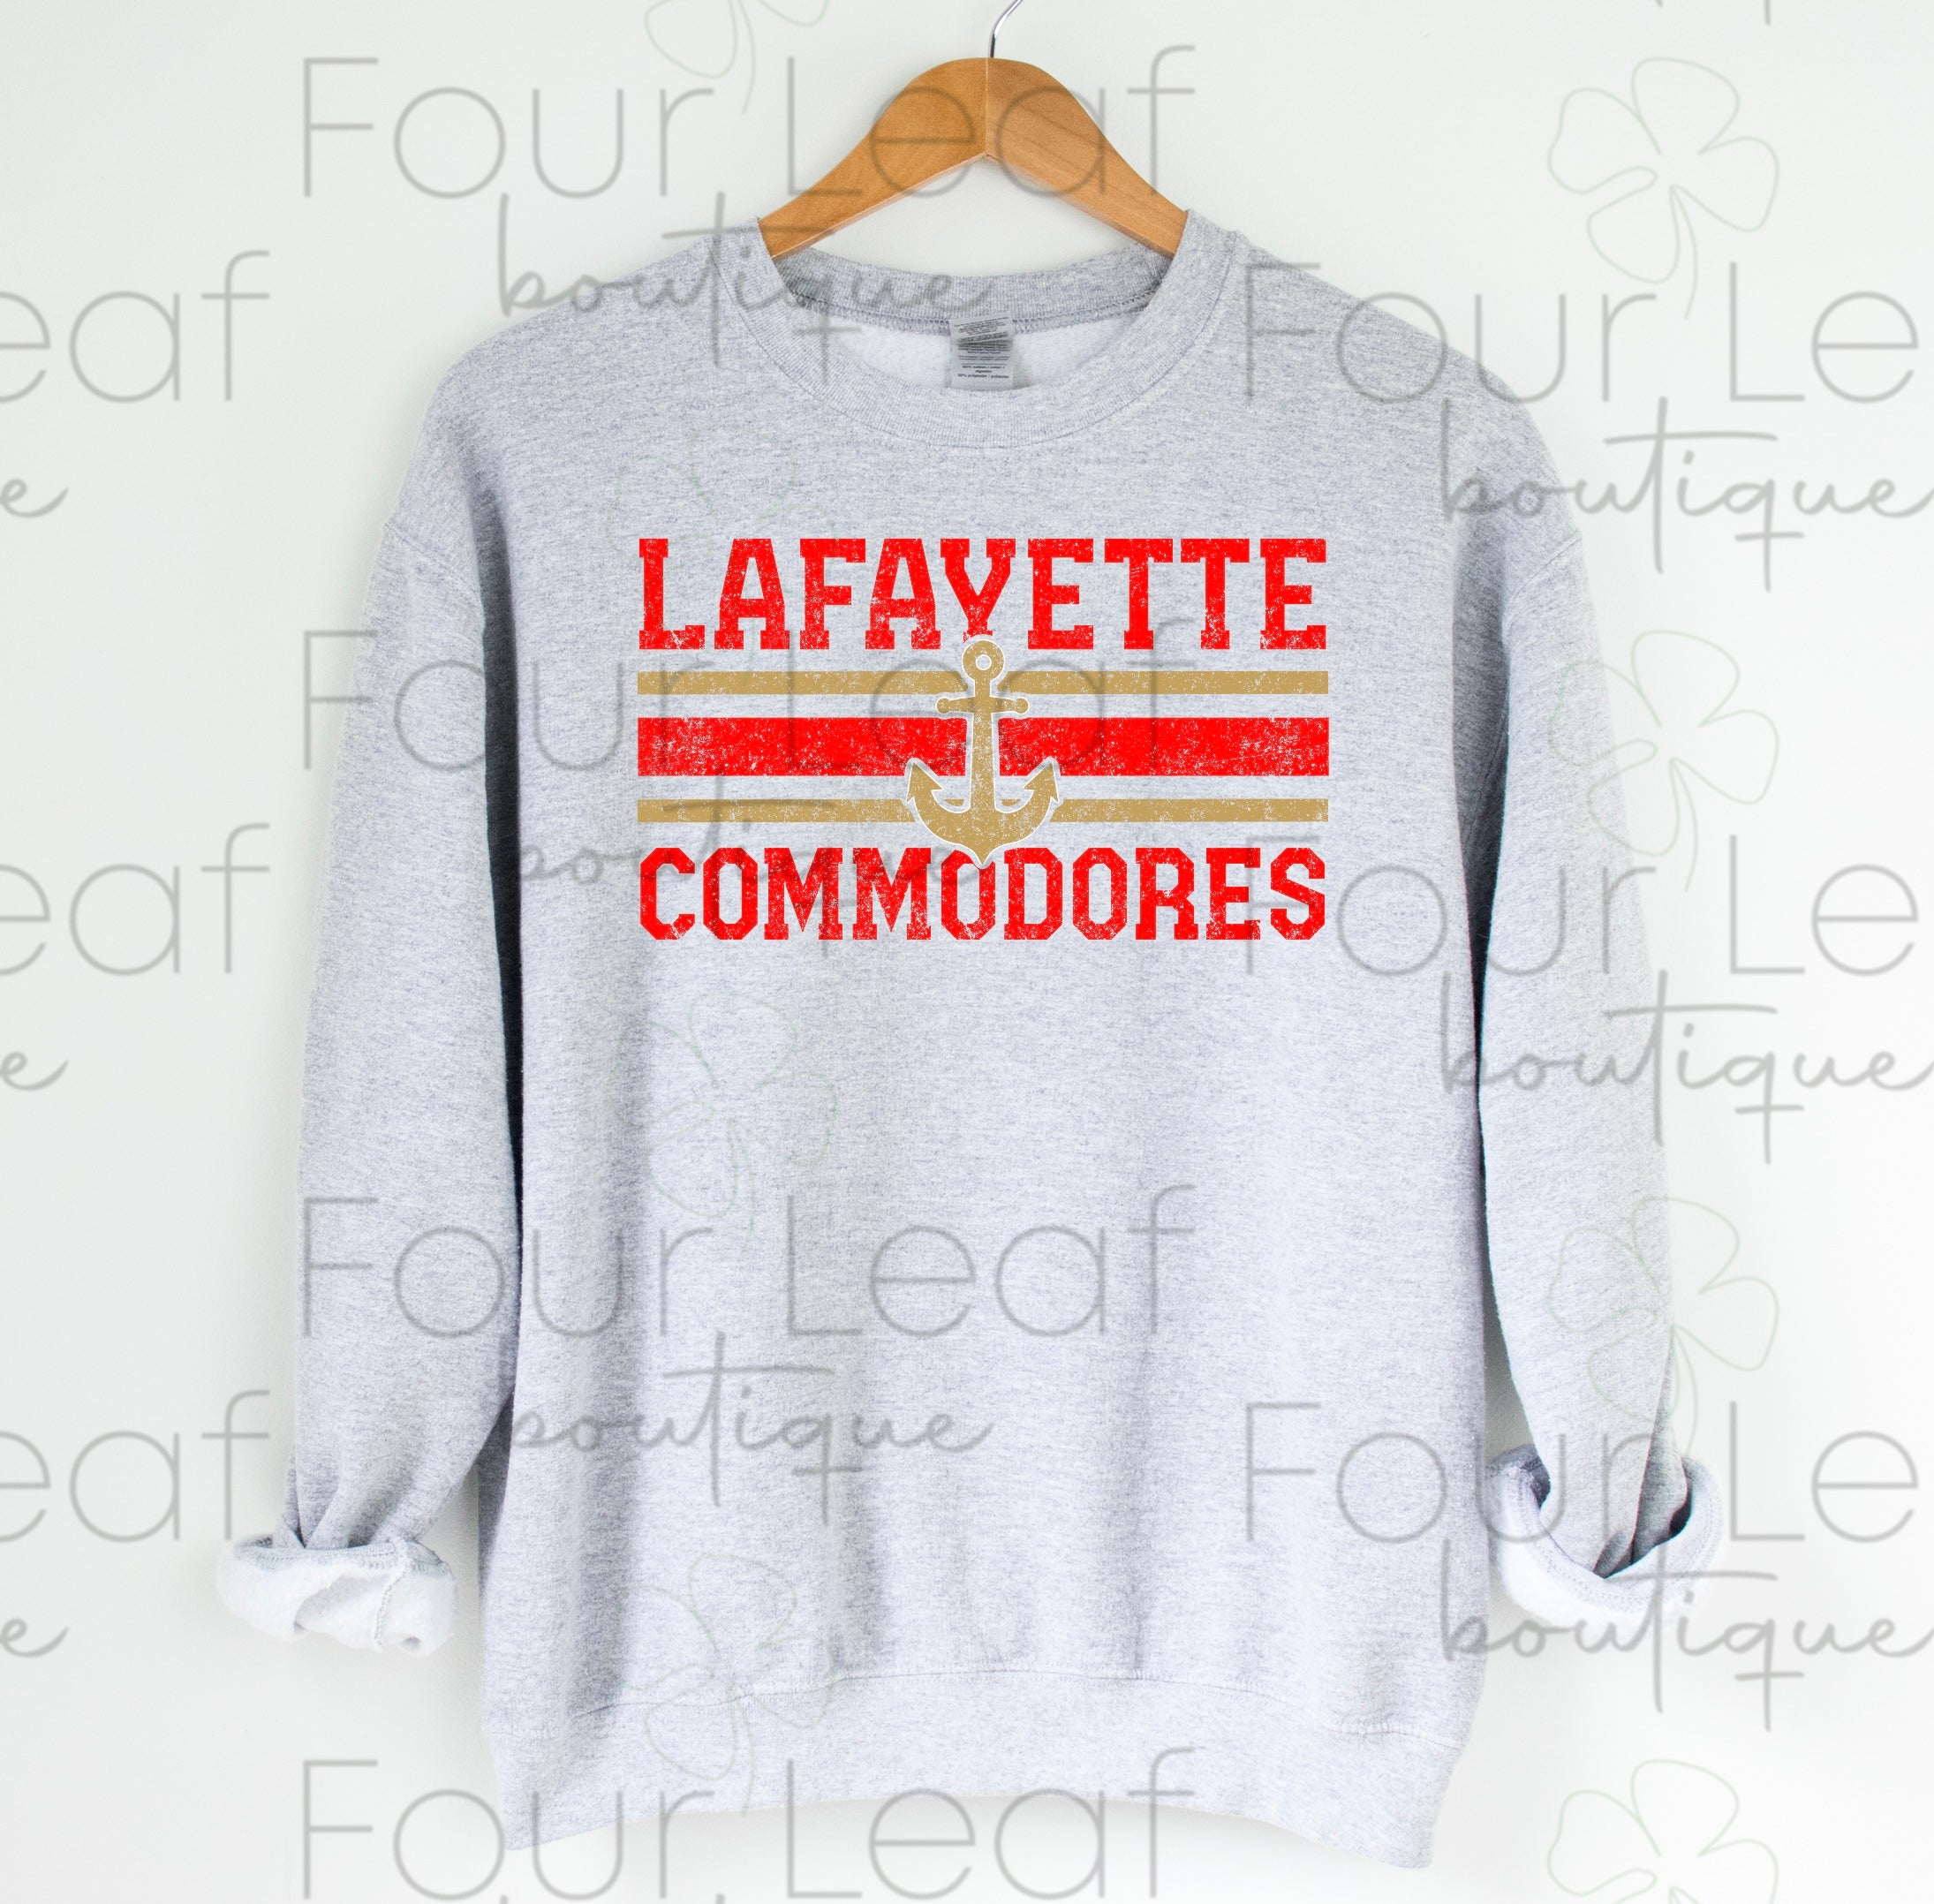 Lafayette Commodores Sweatshirt